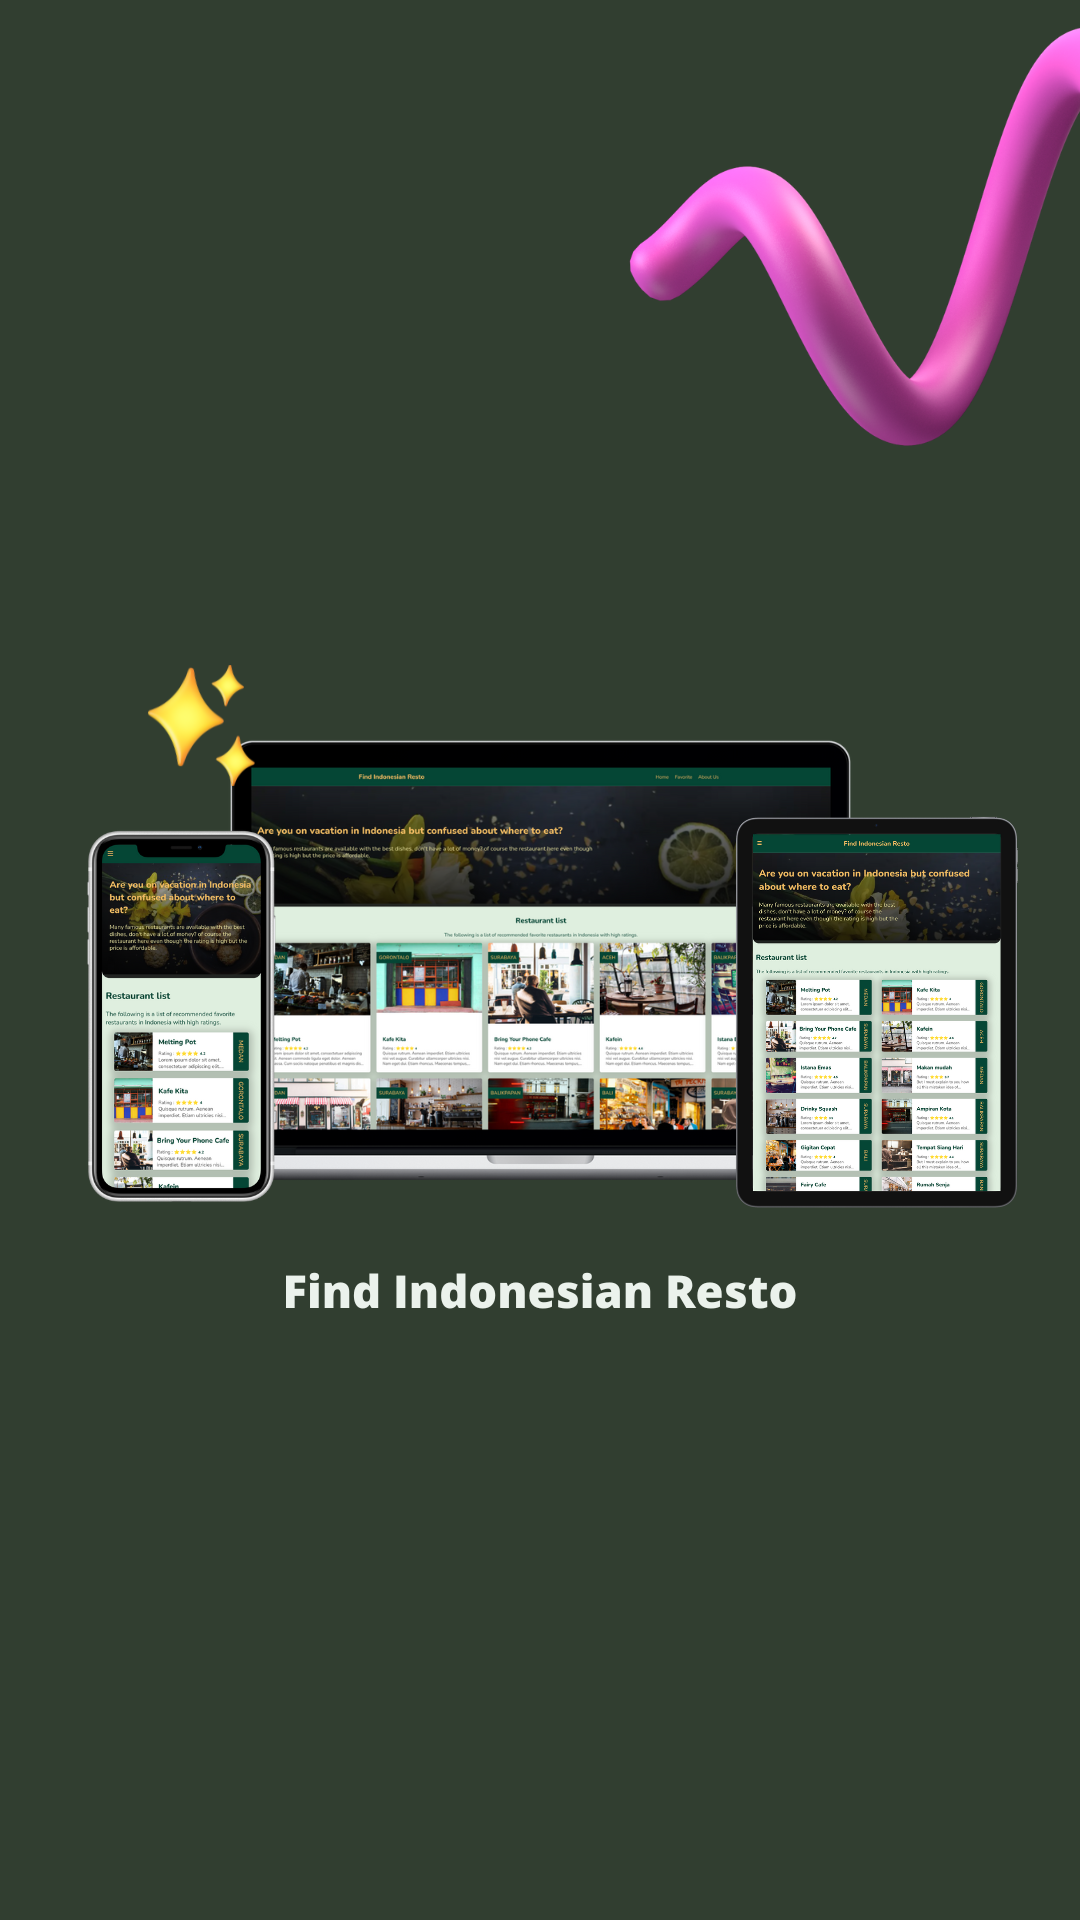 Find Indonesian Resto